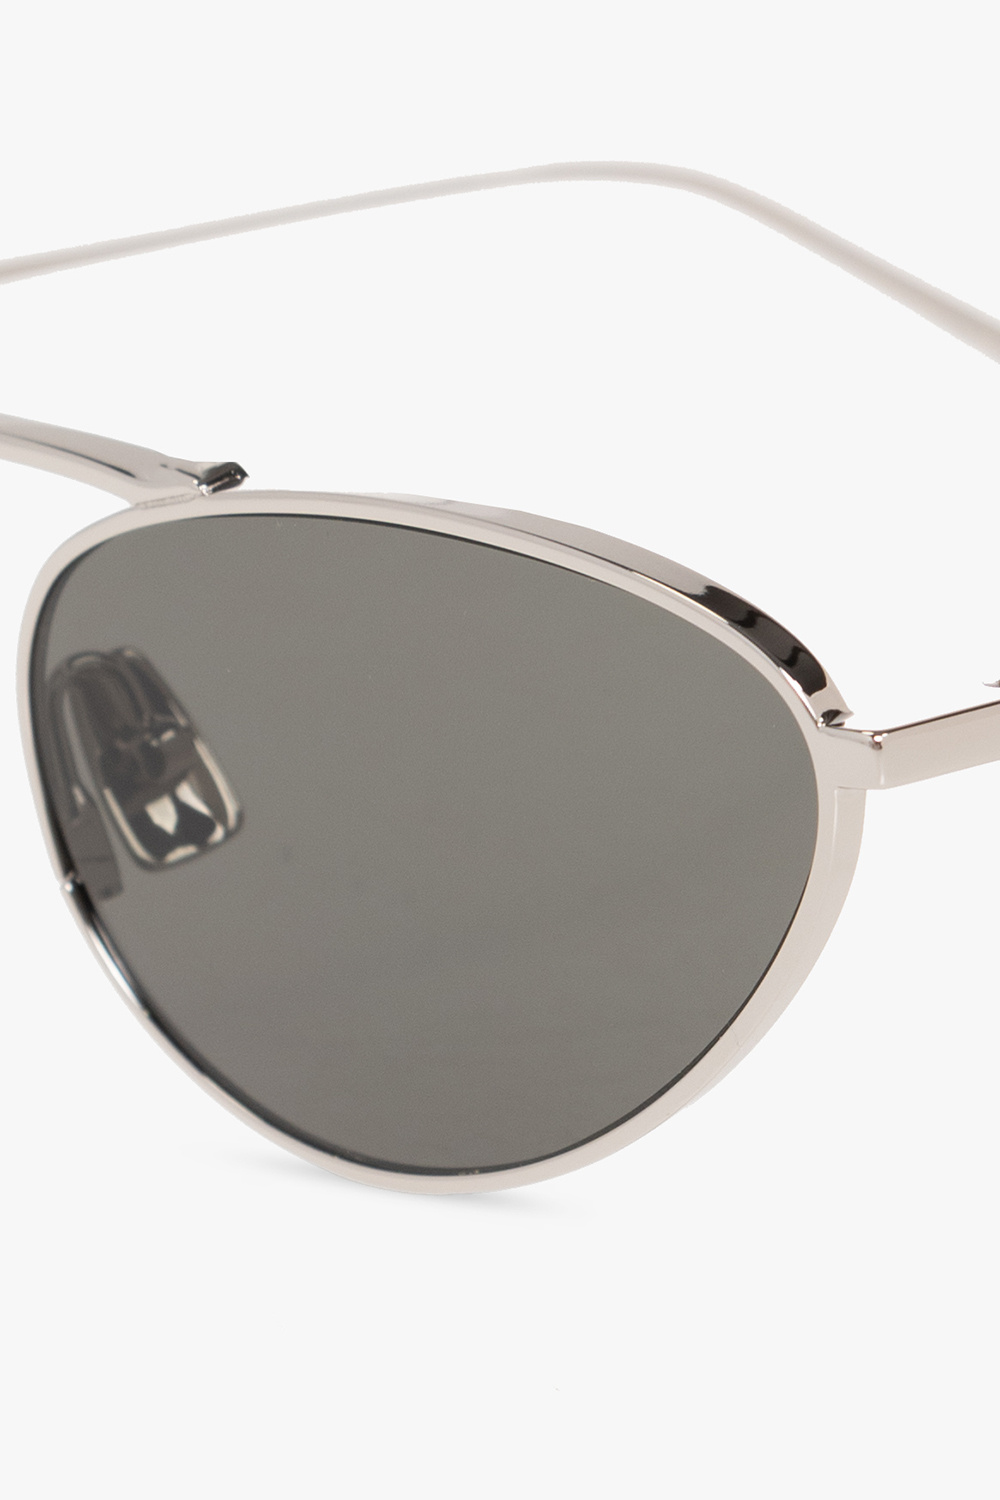 Saint Laurent ‘SL 538’ sunglasses